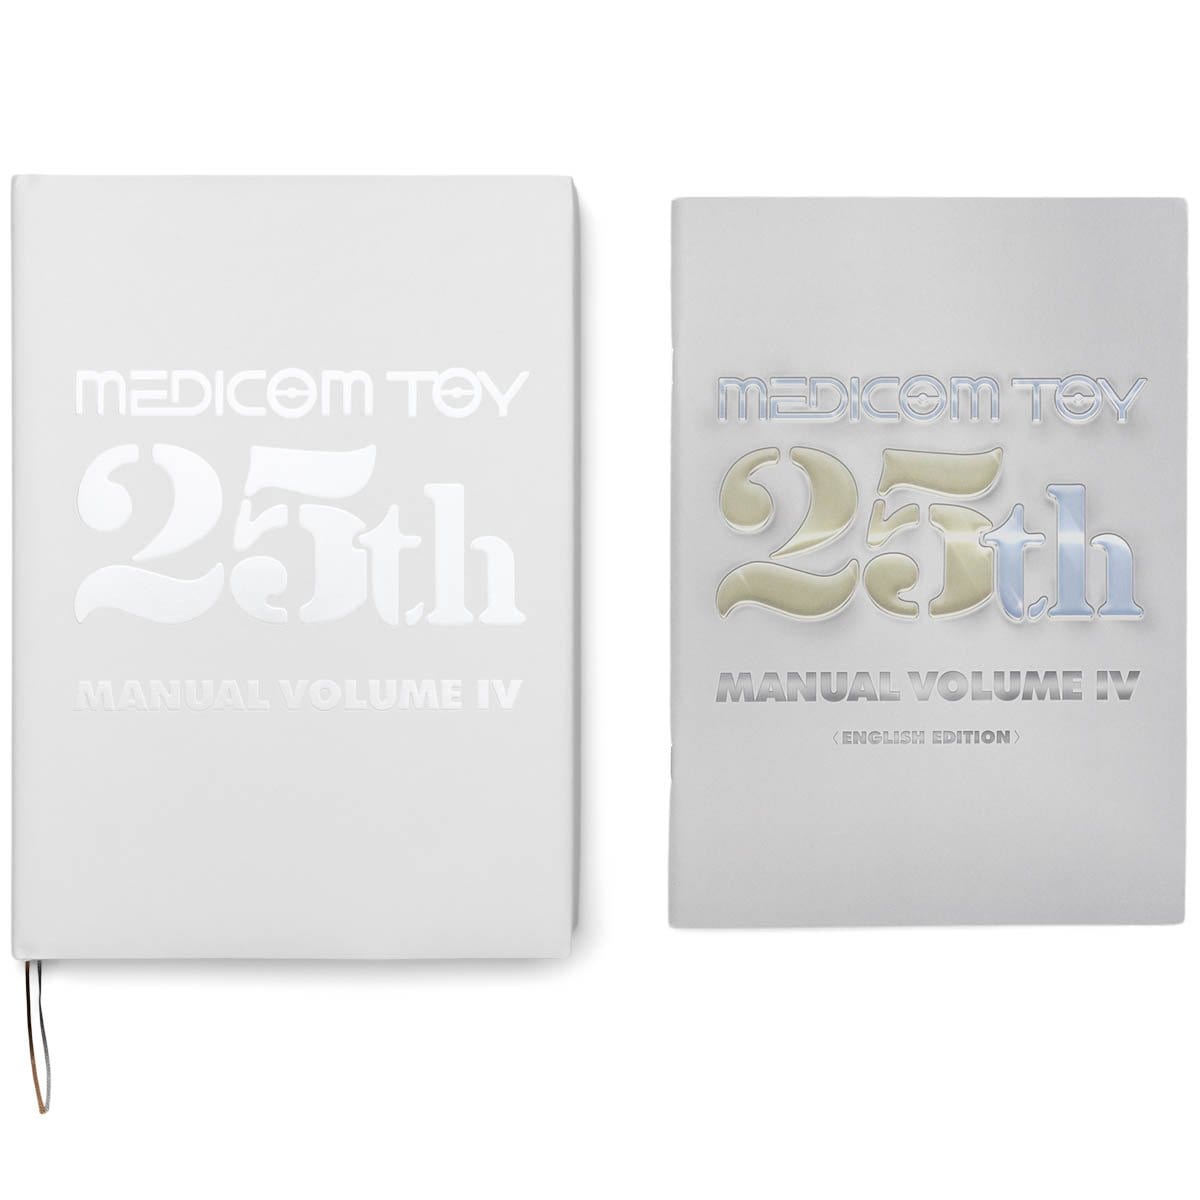 Medicom Toy Books MULTI / O/S MEDICOM TOY 25th ANNIVERSARY BOOK - MANUAL VOLUME IV